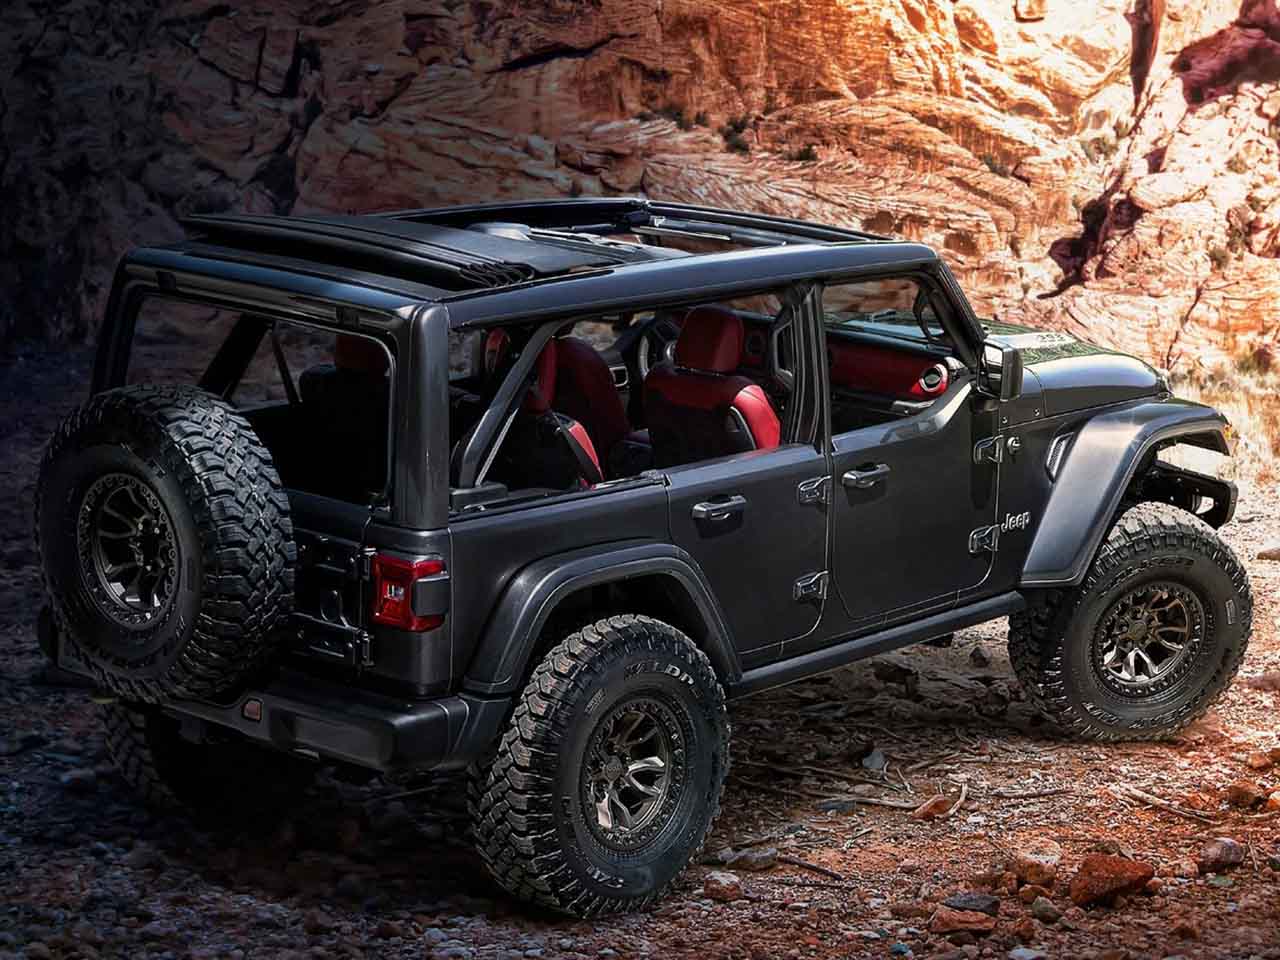 Jeep Wrangler Rubicon 392 concept debuts alongside 2021 Ford Bronco